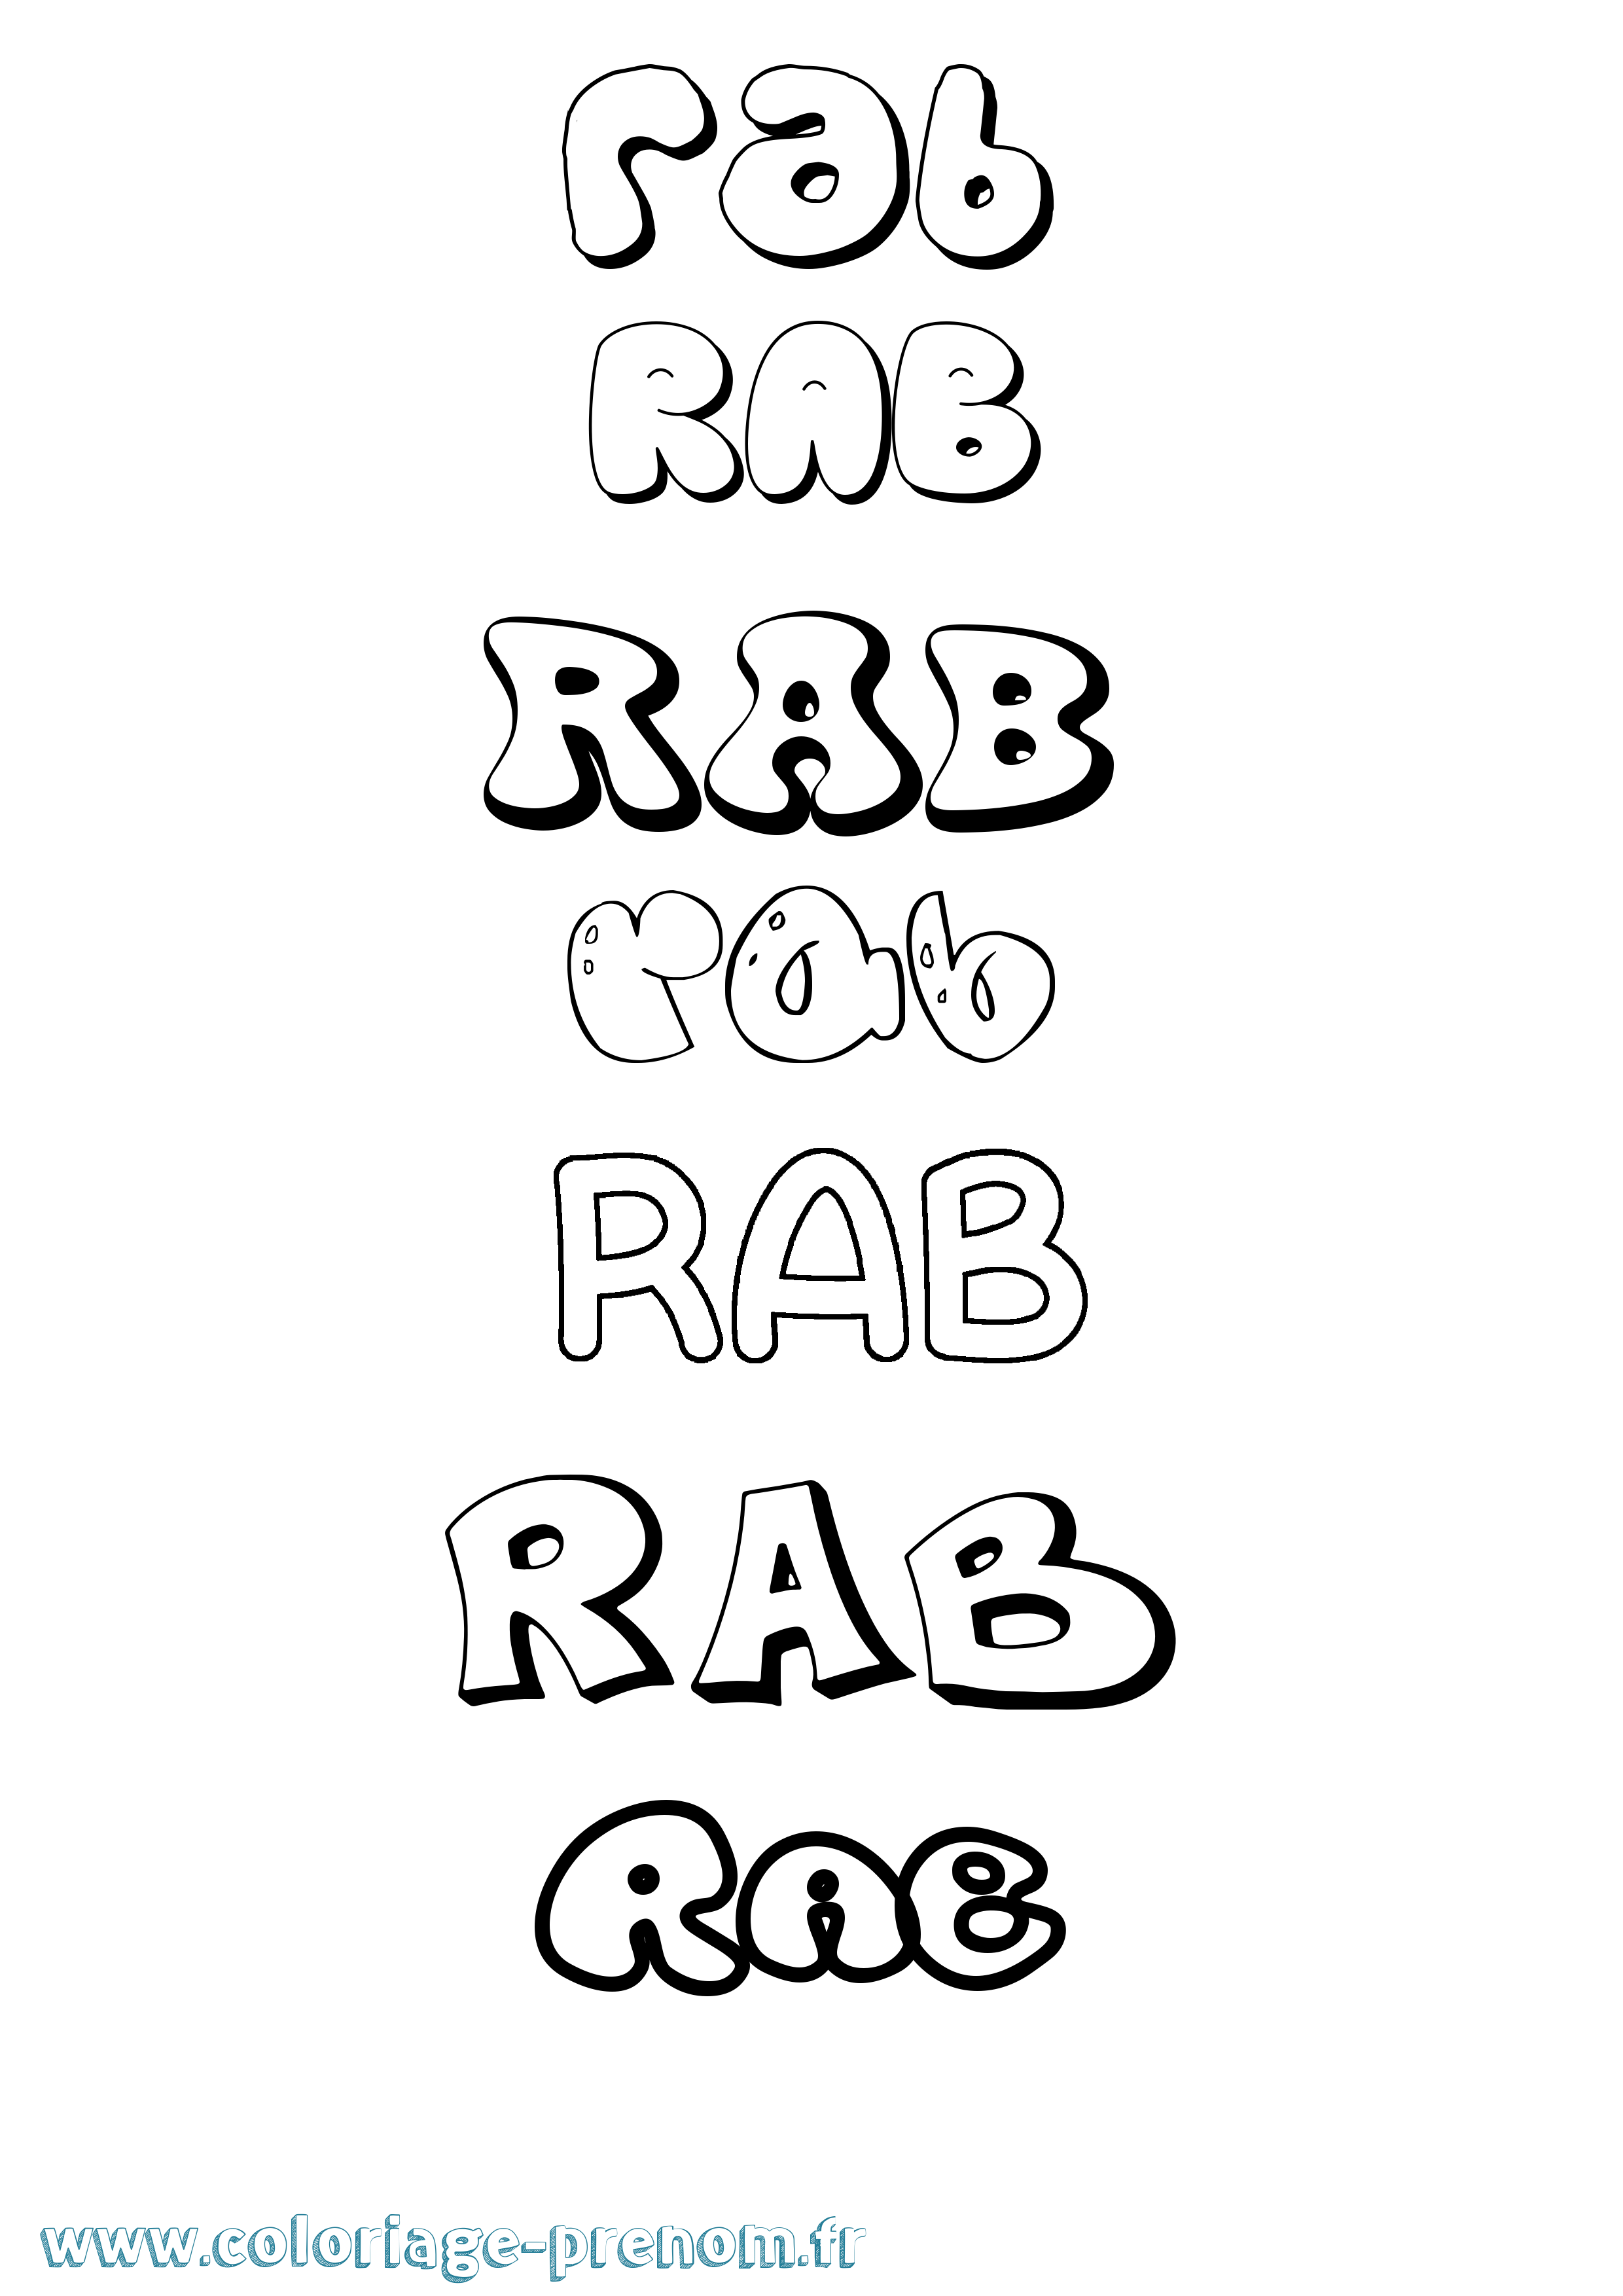 Coloriage prénom Rab Bubble